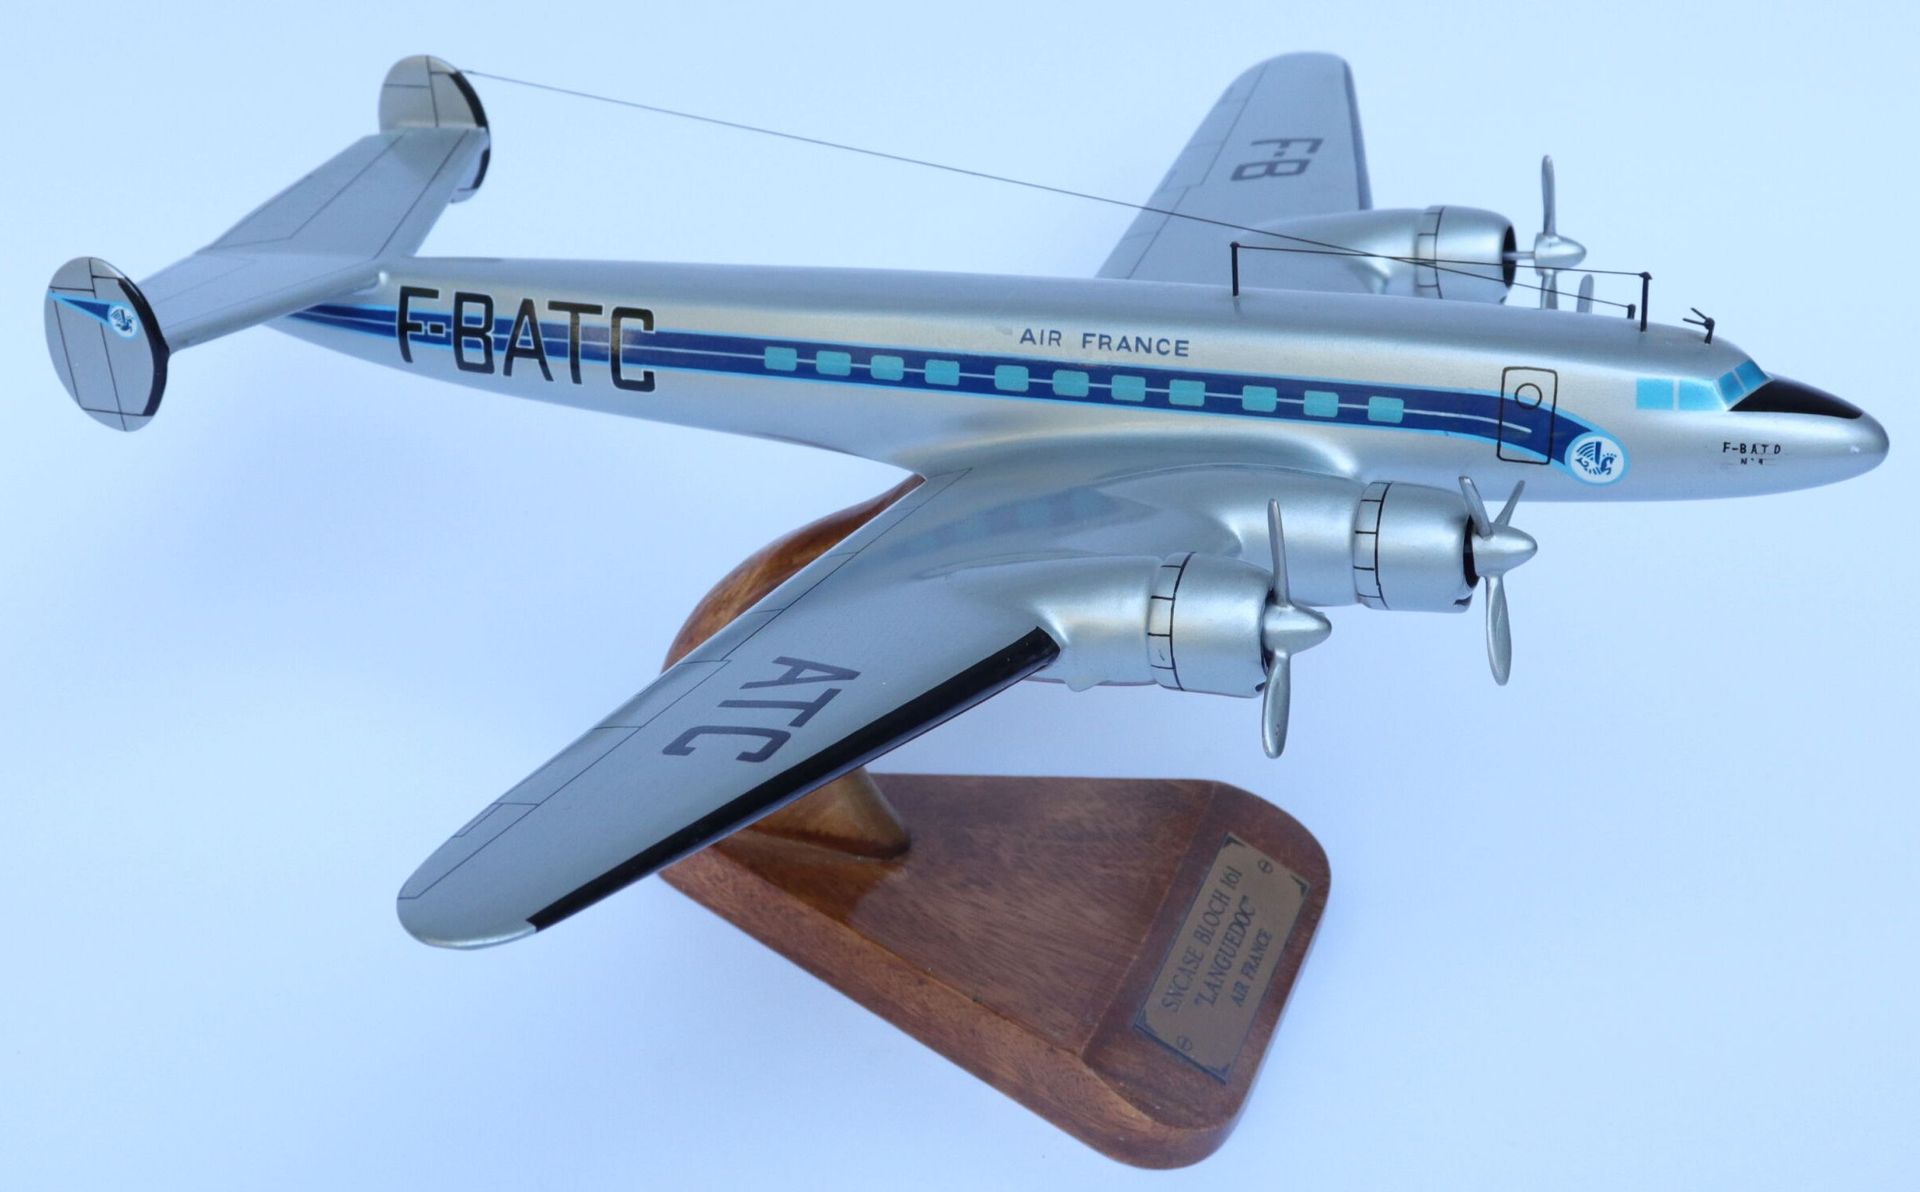 Null Sncase Bloch 161 Languedoc Air France.

喷漆的木制模型，注册号为F-BATC。

清漆木质底座。

当代制造。&hellip;